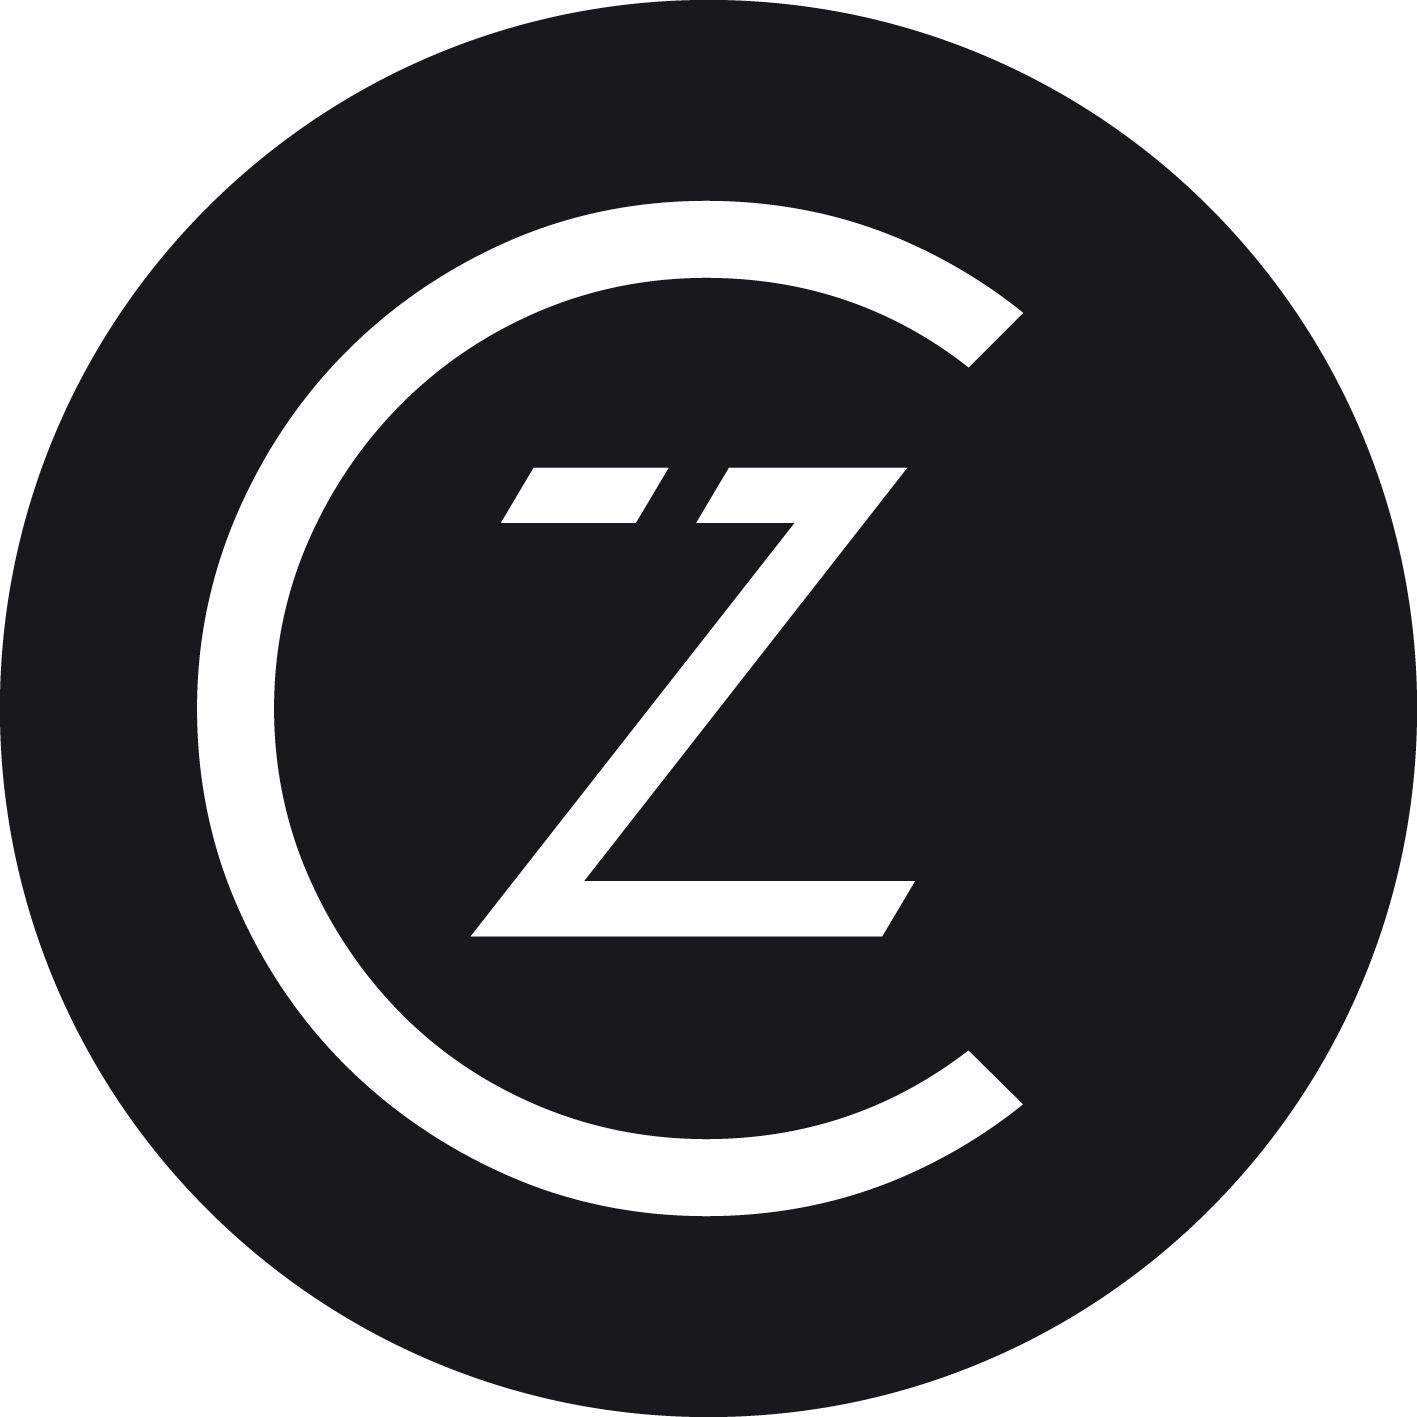 CZ Logo - LOGO CZ - Claudio Piccini Design